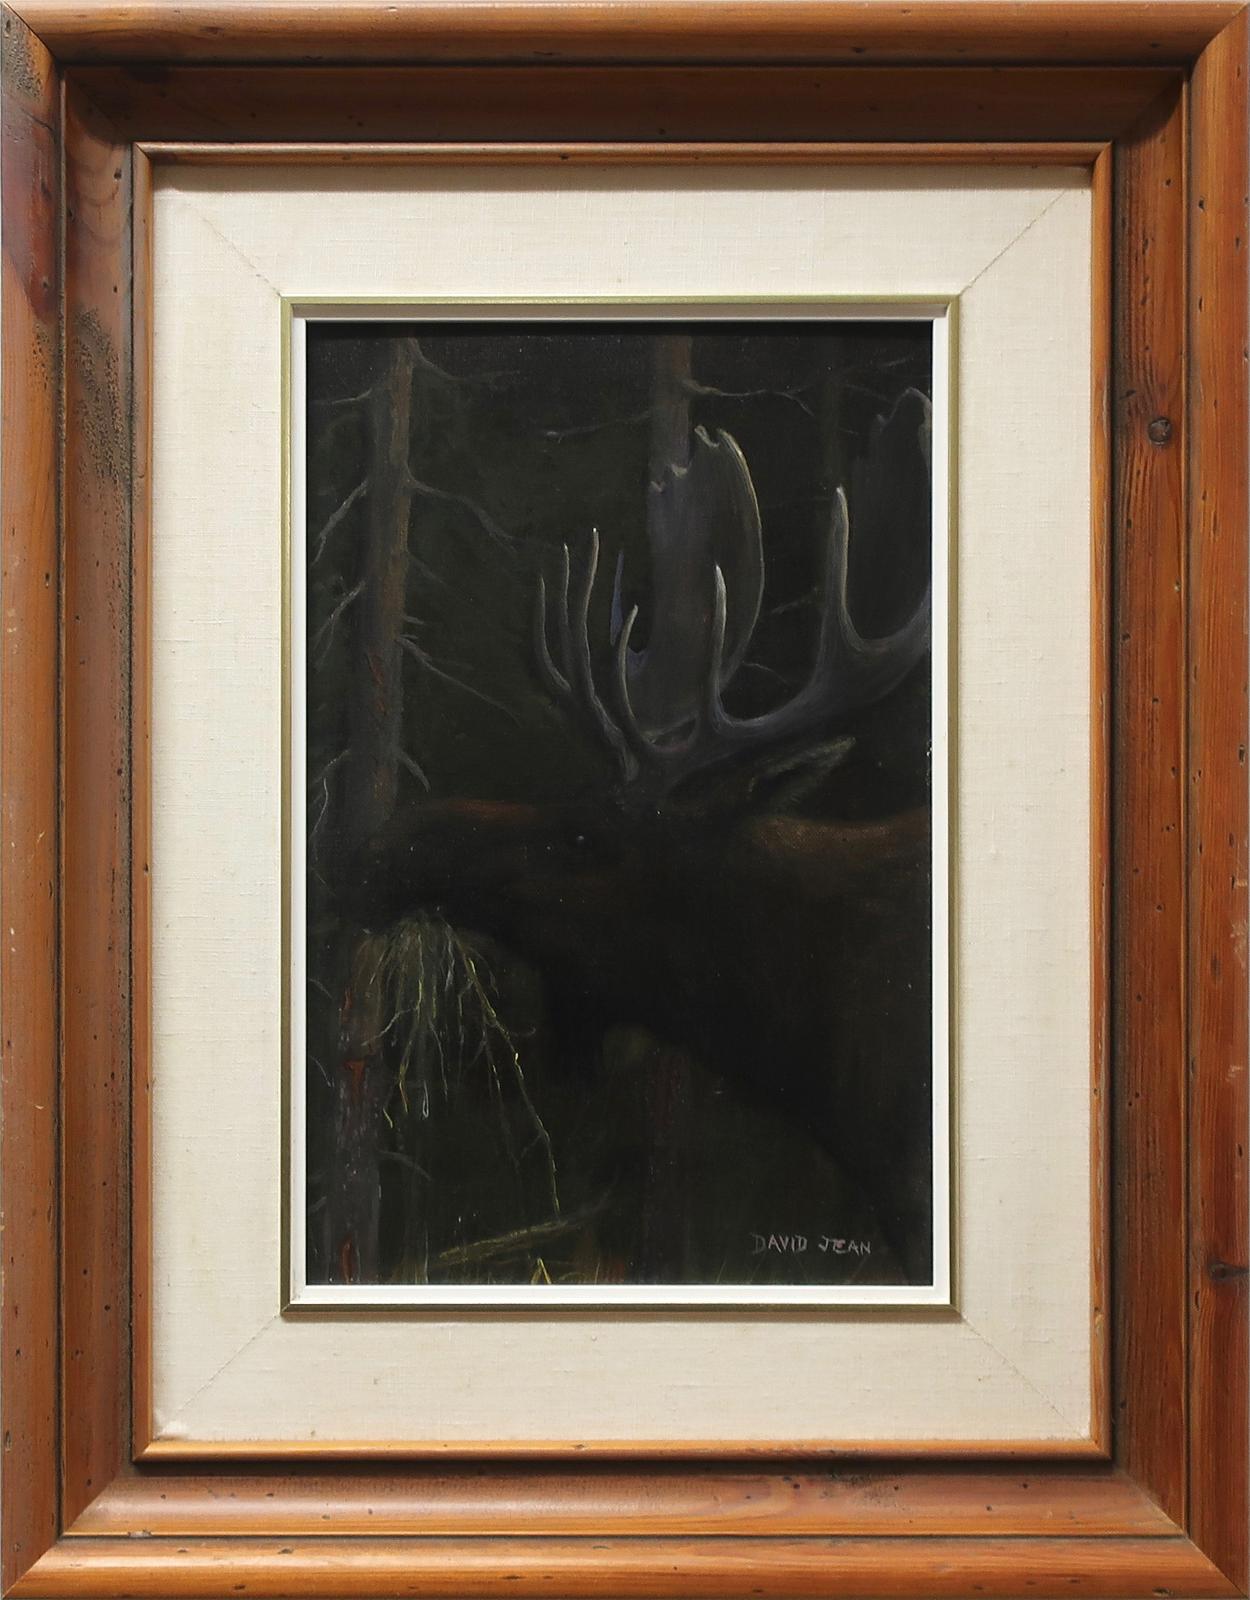 David Jean (1938) - Untitled (Moose)